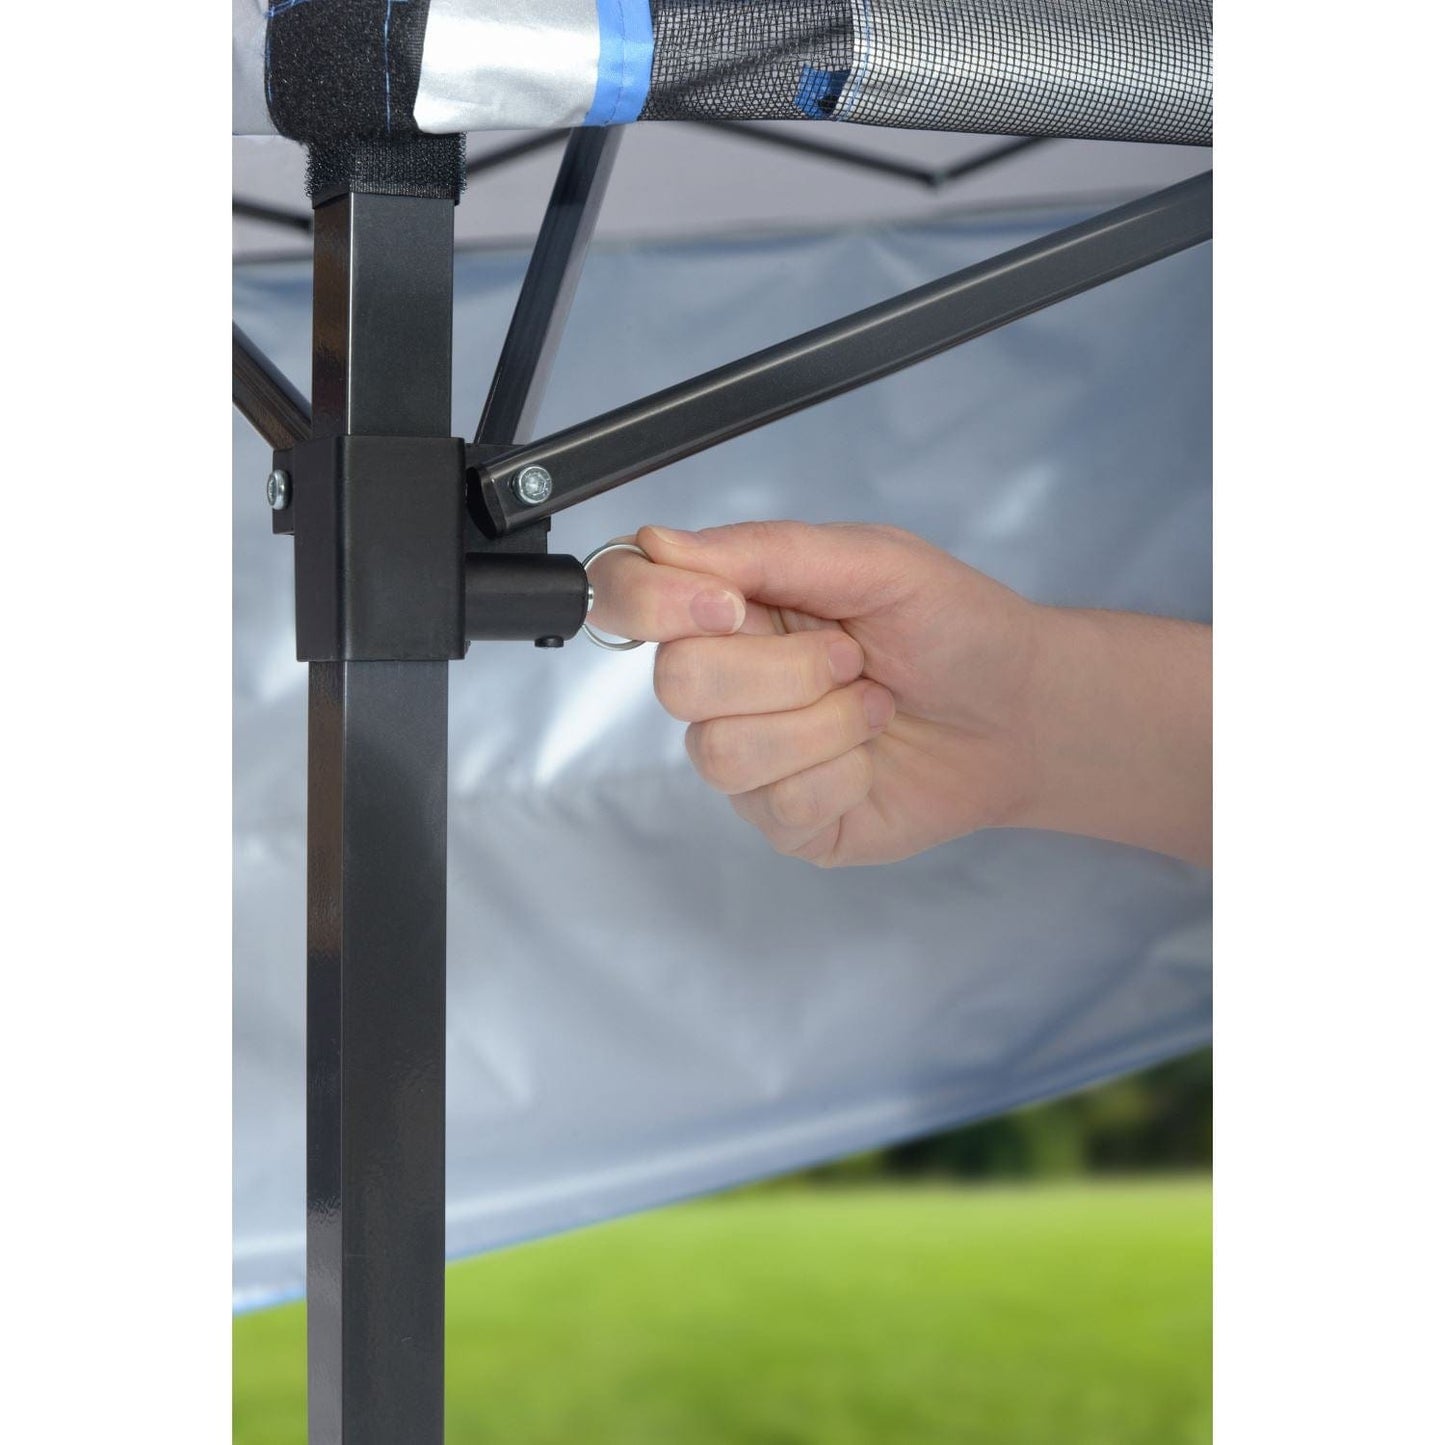 Quik Shade Pop Up Canopies Quik Shade | Go Hybrid 6' x 6' Slant Leg Canopy - Regatta Blue 157433DS